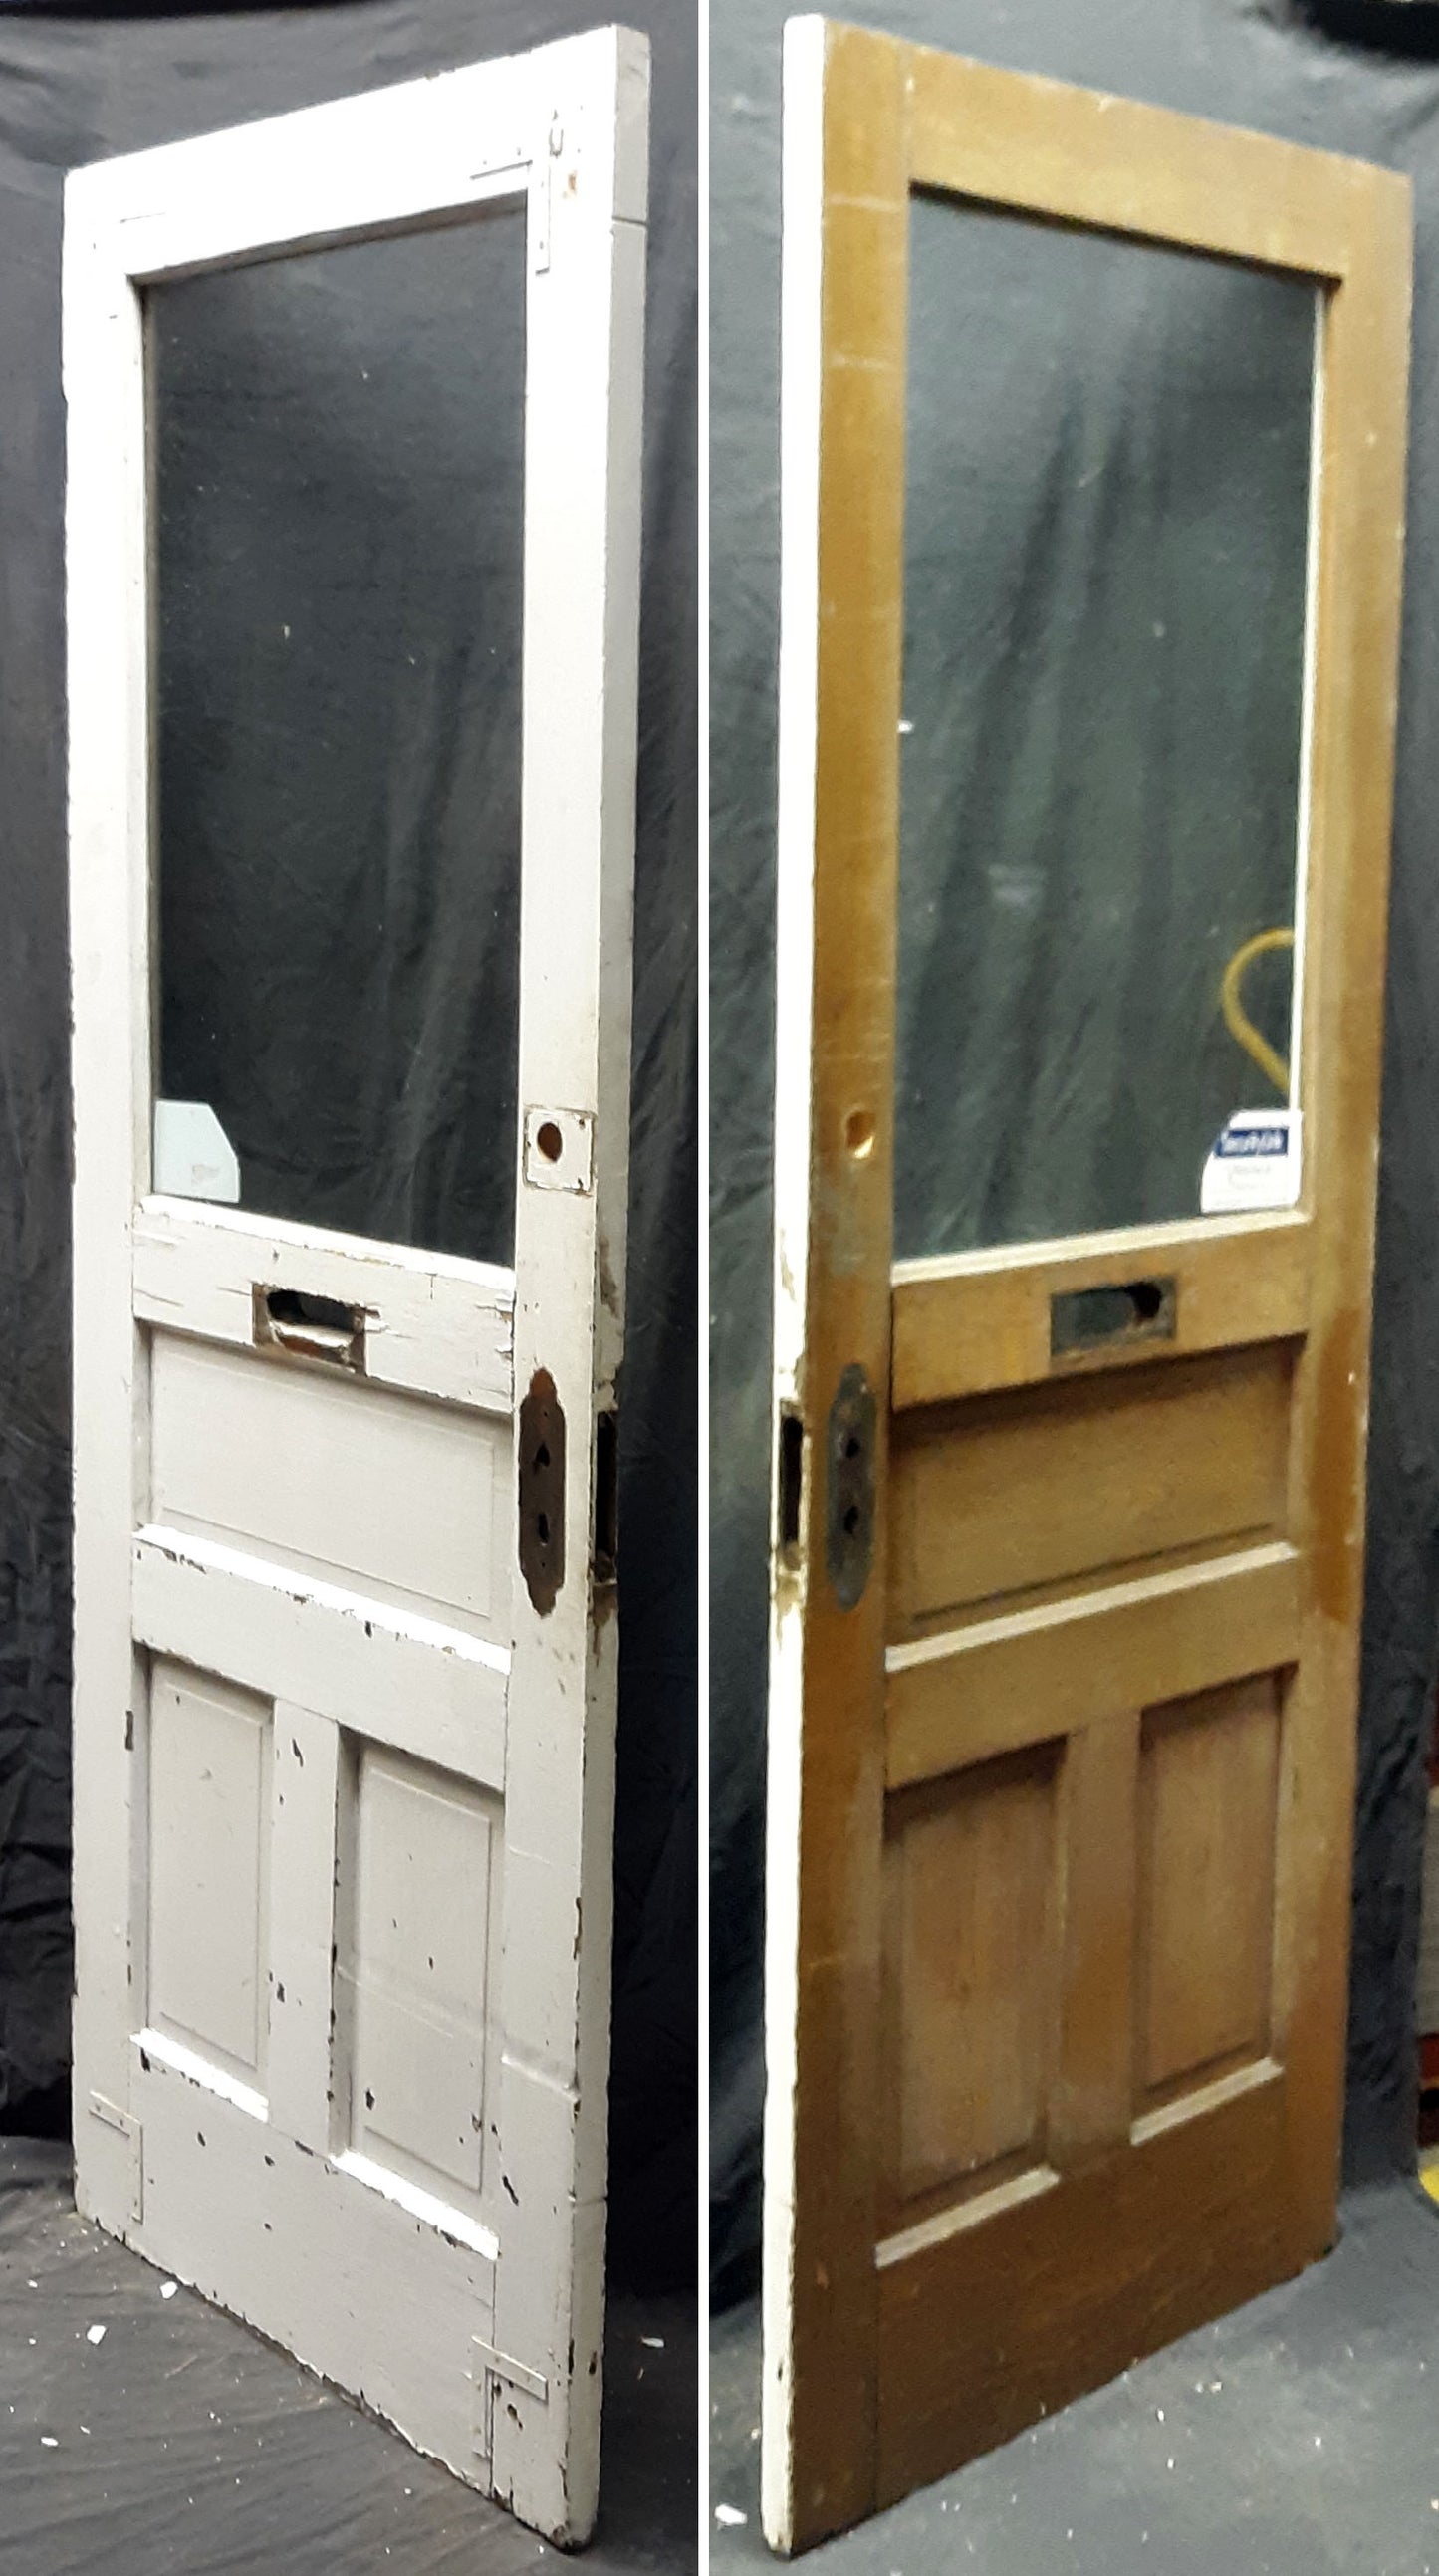 32x79" Antique Vintage Old SOLID Wood Wooden Entry Door Panels Window Wavy Glass